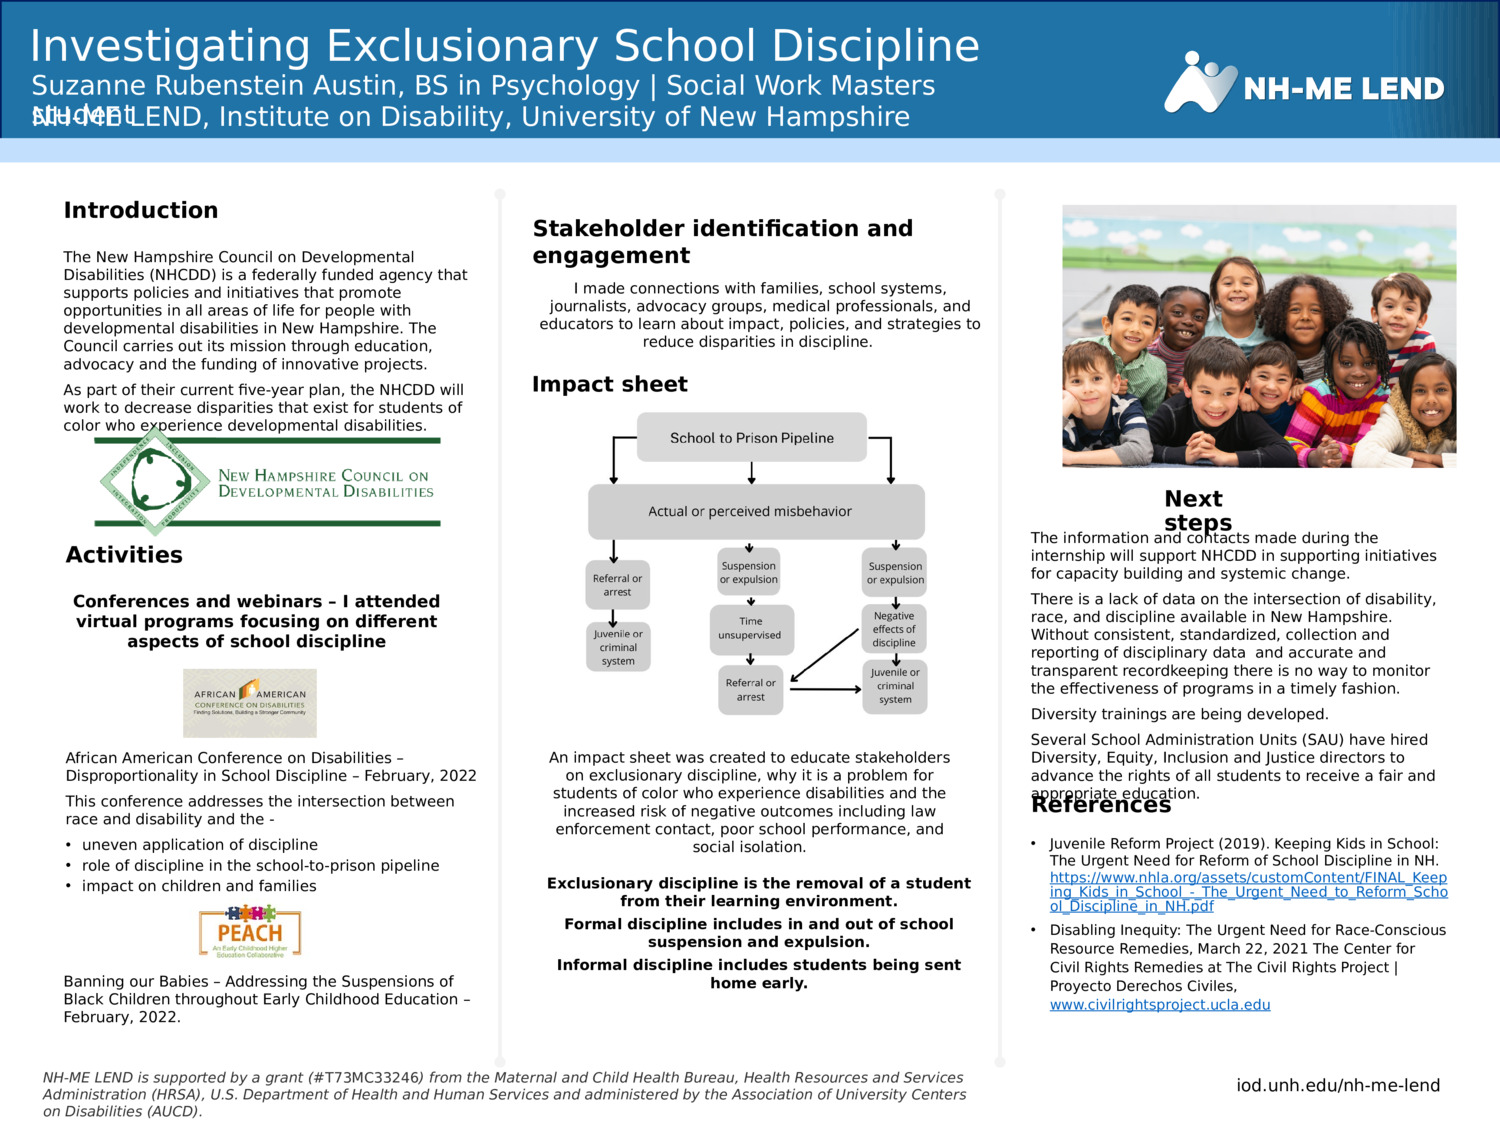 Investigating Exclusionary School Discipline by sra1026